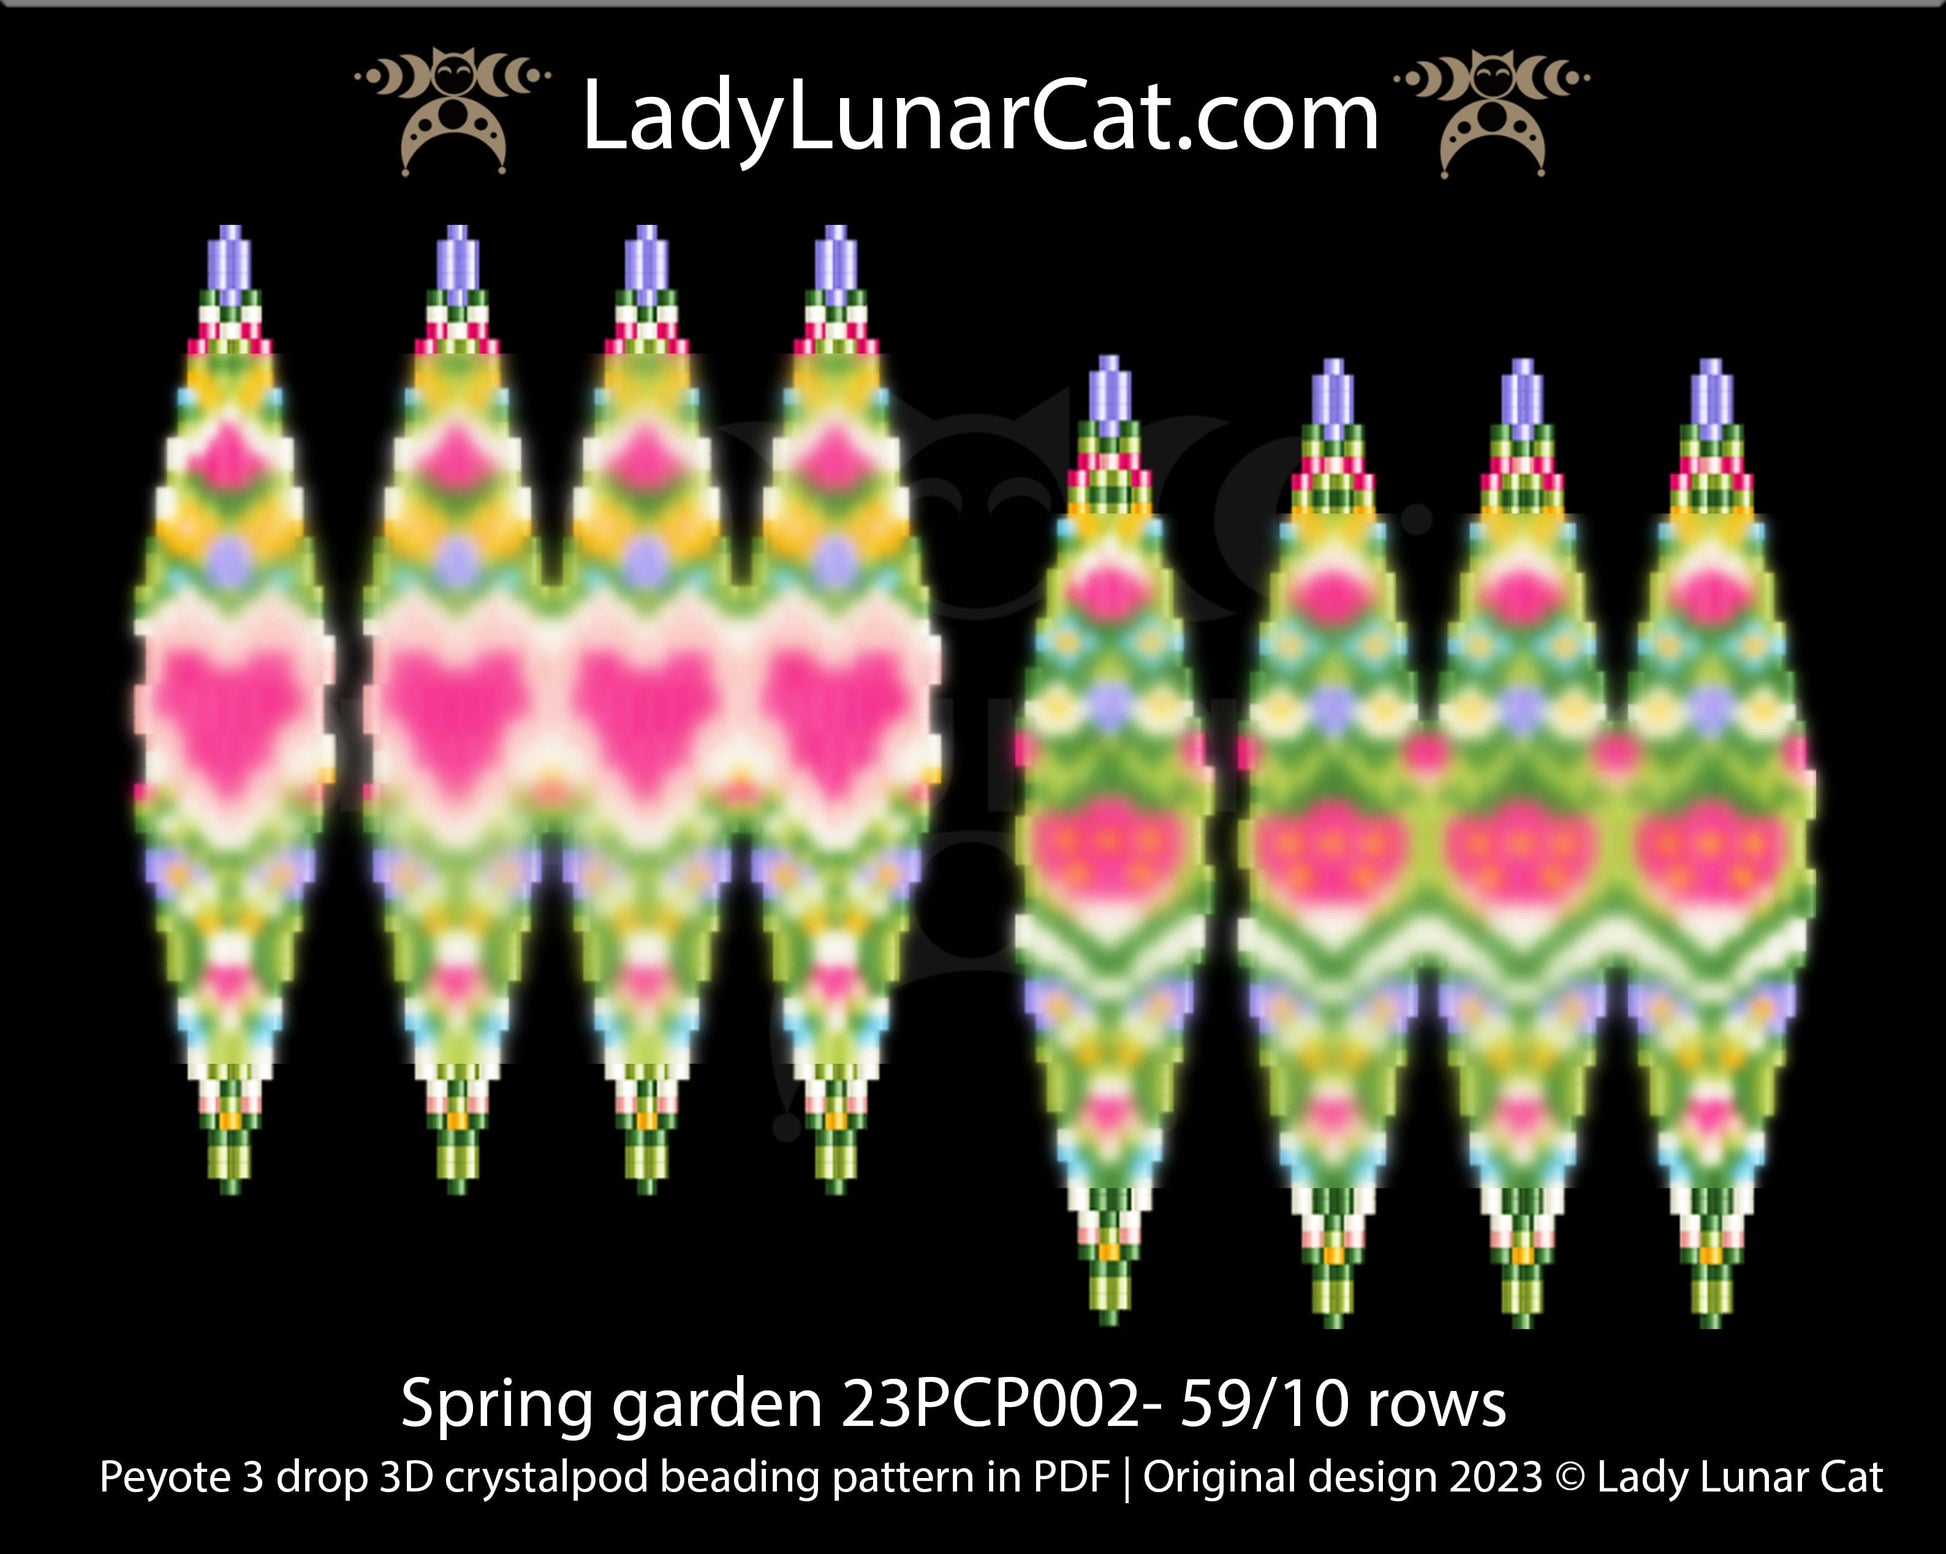 3drop pod pattern or crystalpod pattern for beading Spring garden 23PCP002 LadyLunarCat